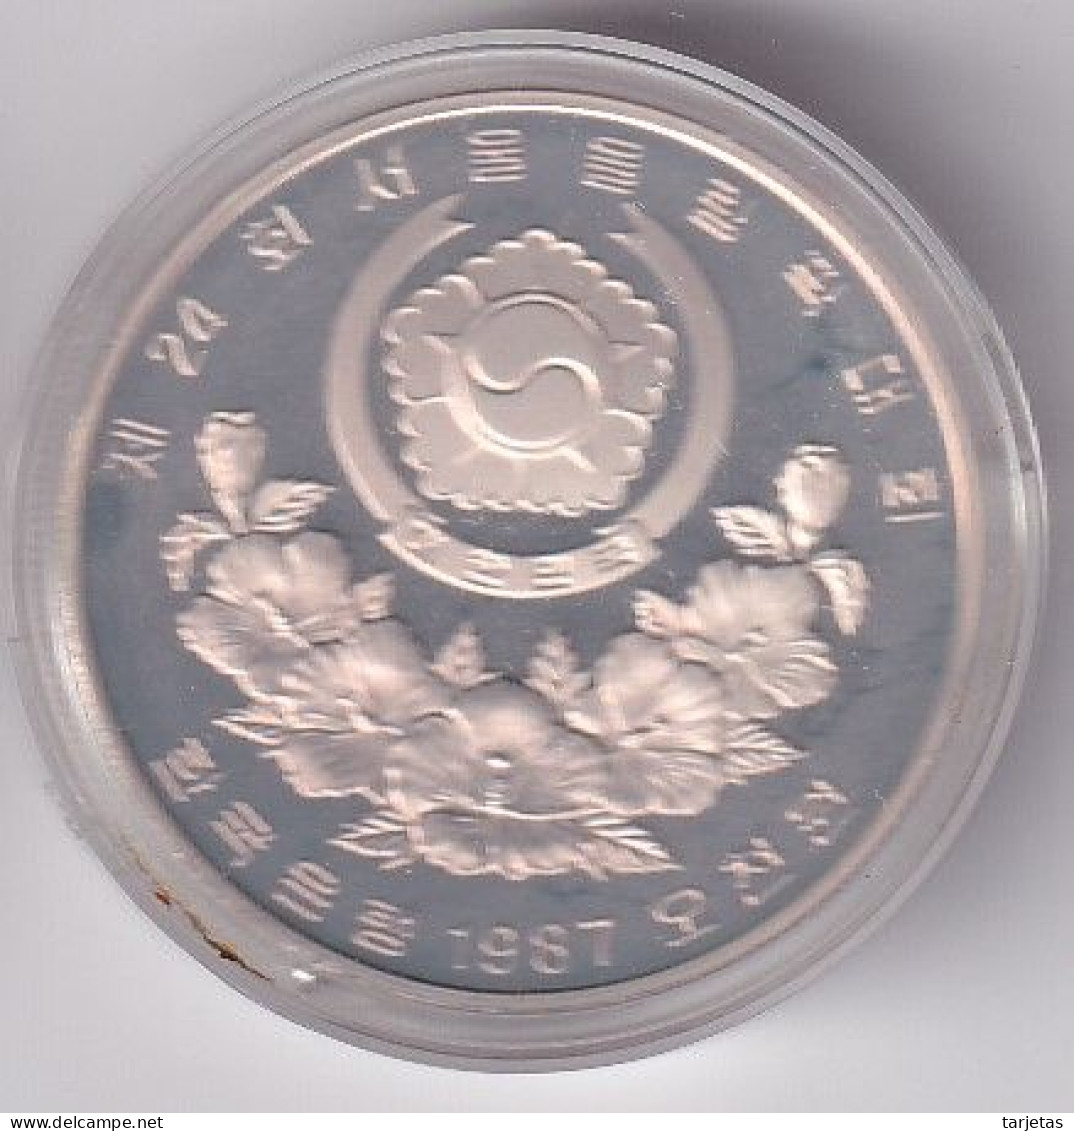 MONEDA DE PLATA DE COREA DEL SUR DE 5000 WON DEL AÑO 1987  (COIN) SEOUL 1988 - Korea (Zuid)